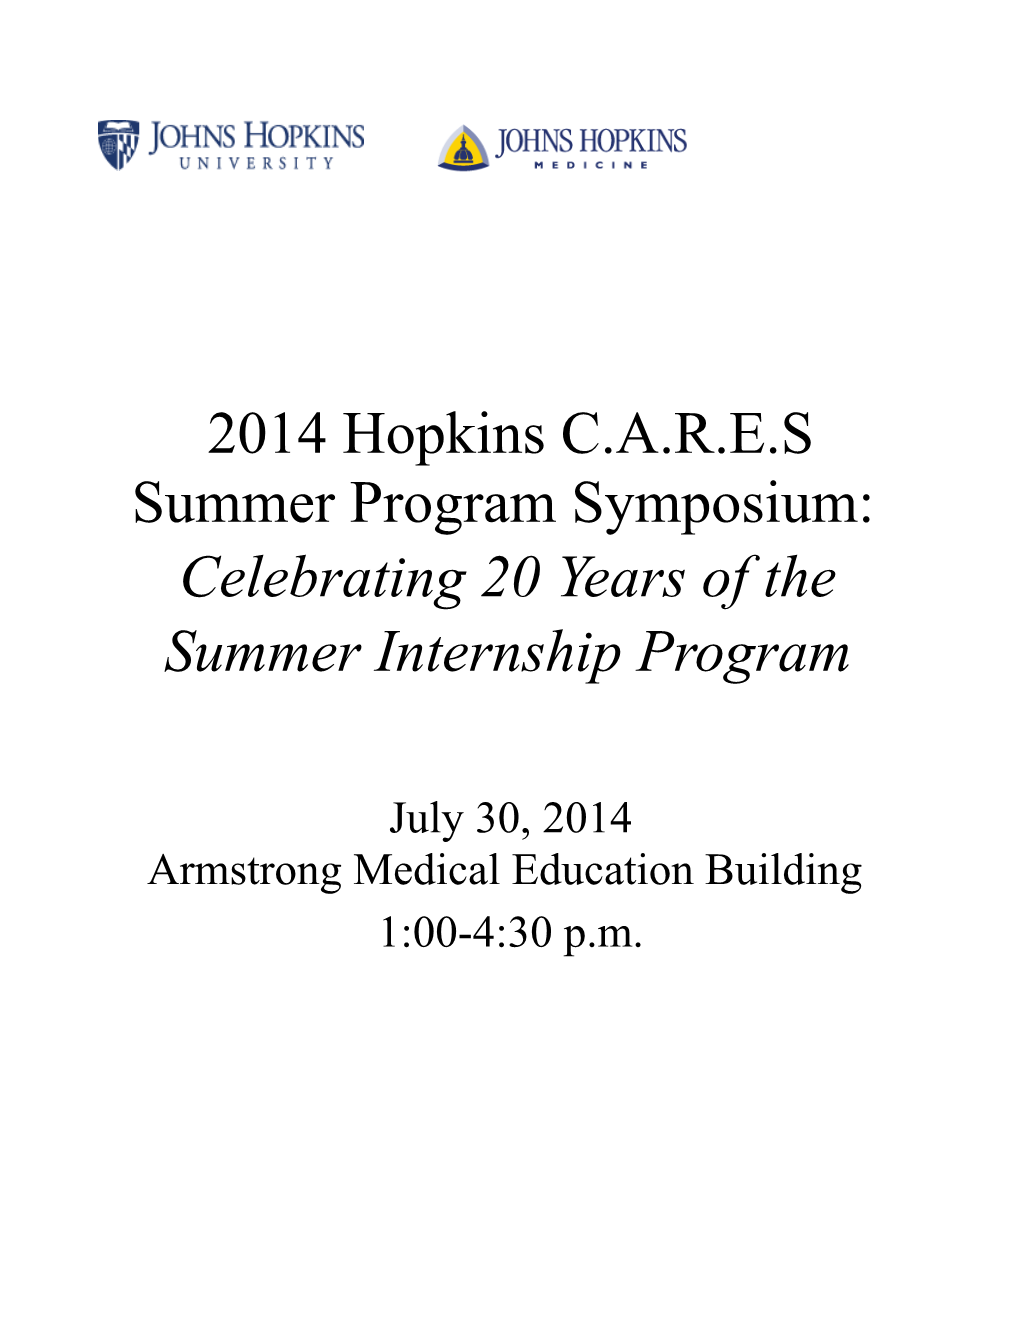 Summer Program Symposium: Celebrating 20 Years of the Summer Internship Program